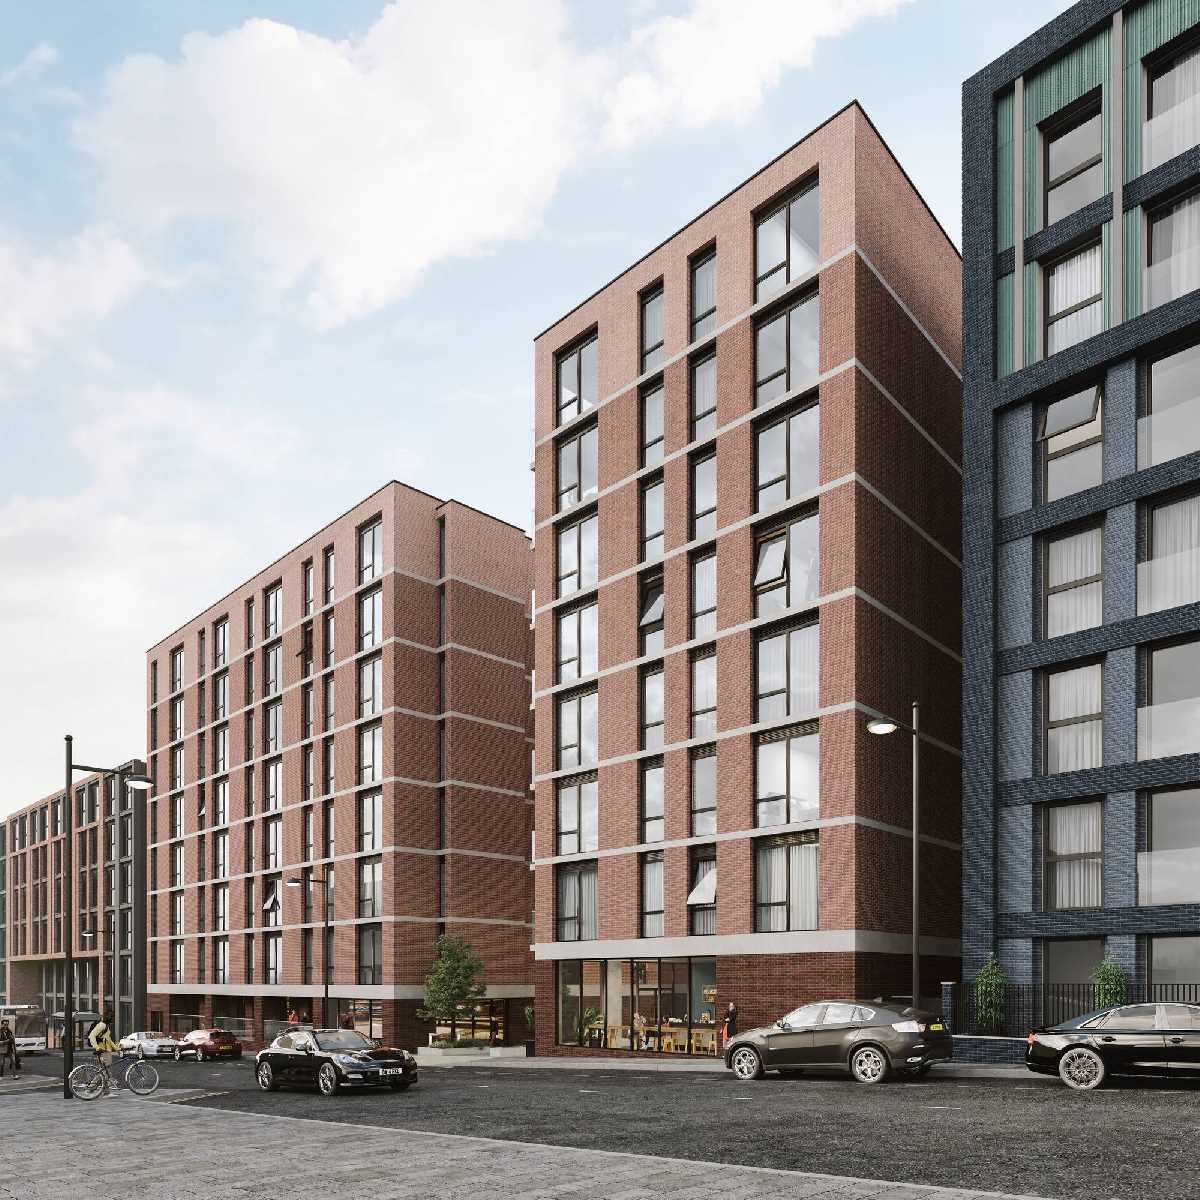 New 130-apartment scheme for 260 Bradford Street